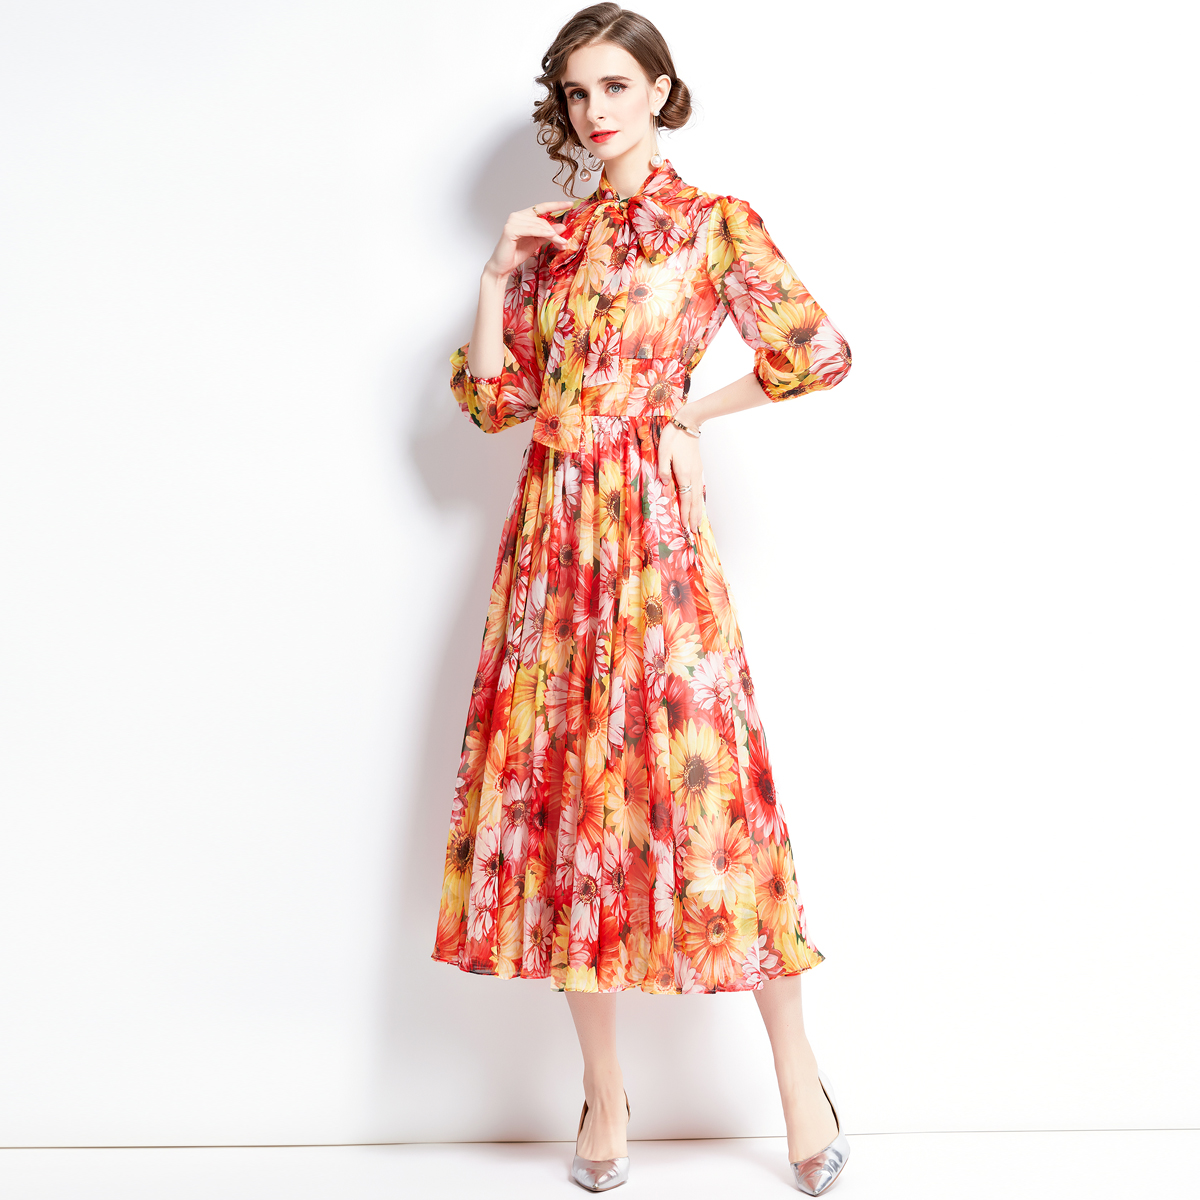 Long European style short sleeve printing dress for women